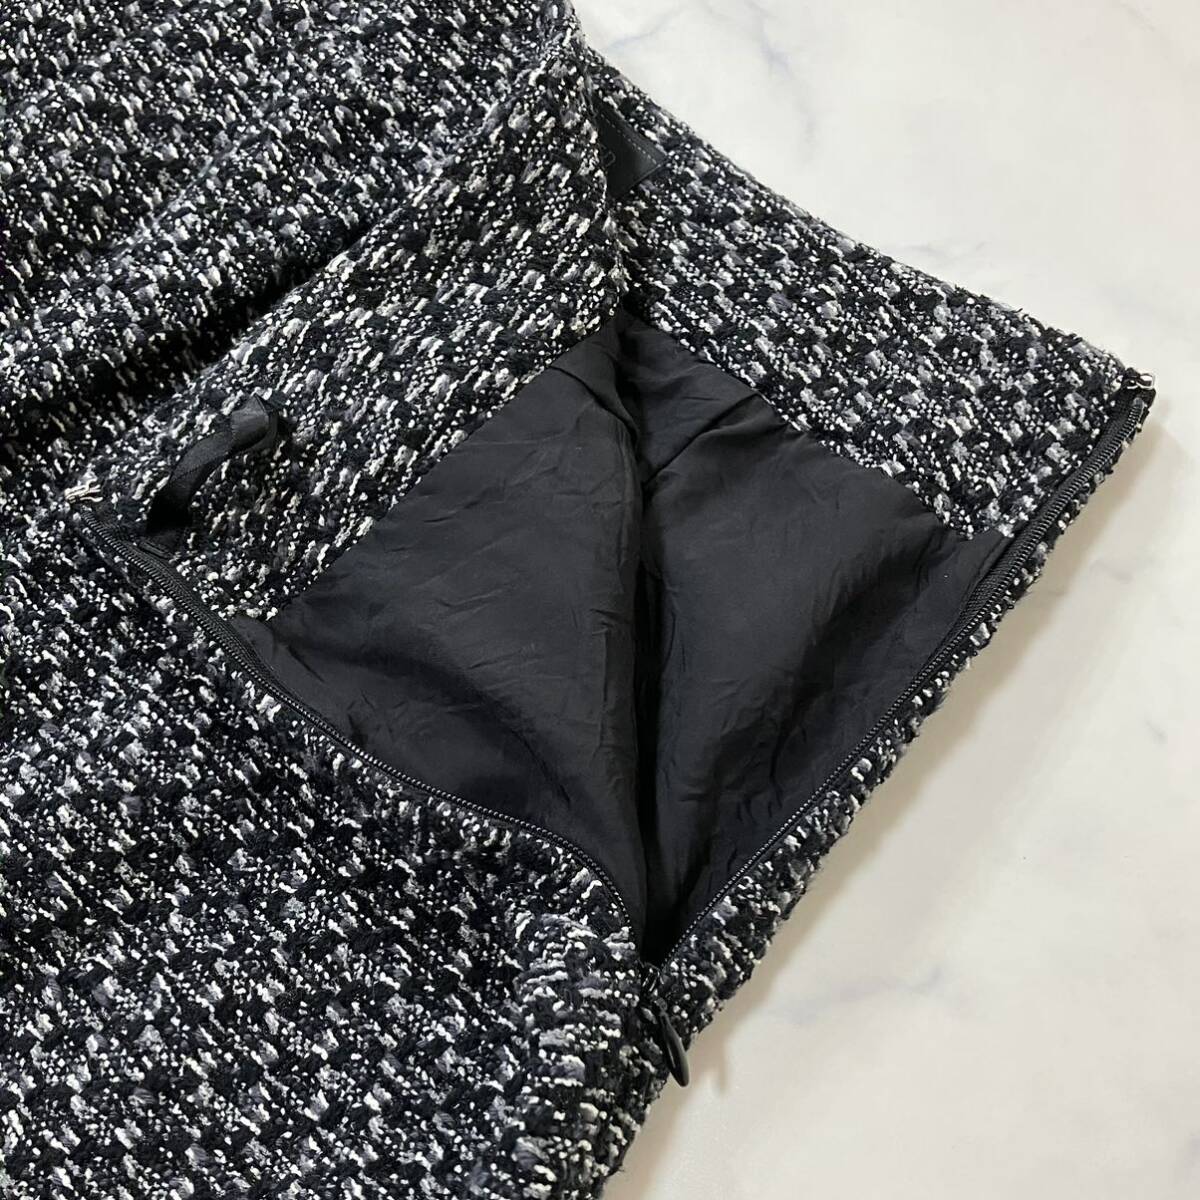 UNTITLED Untitled сделано в Японии твид tuck подкладка имеется Zip юбка до колена черный 2